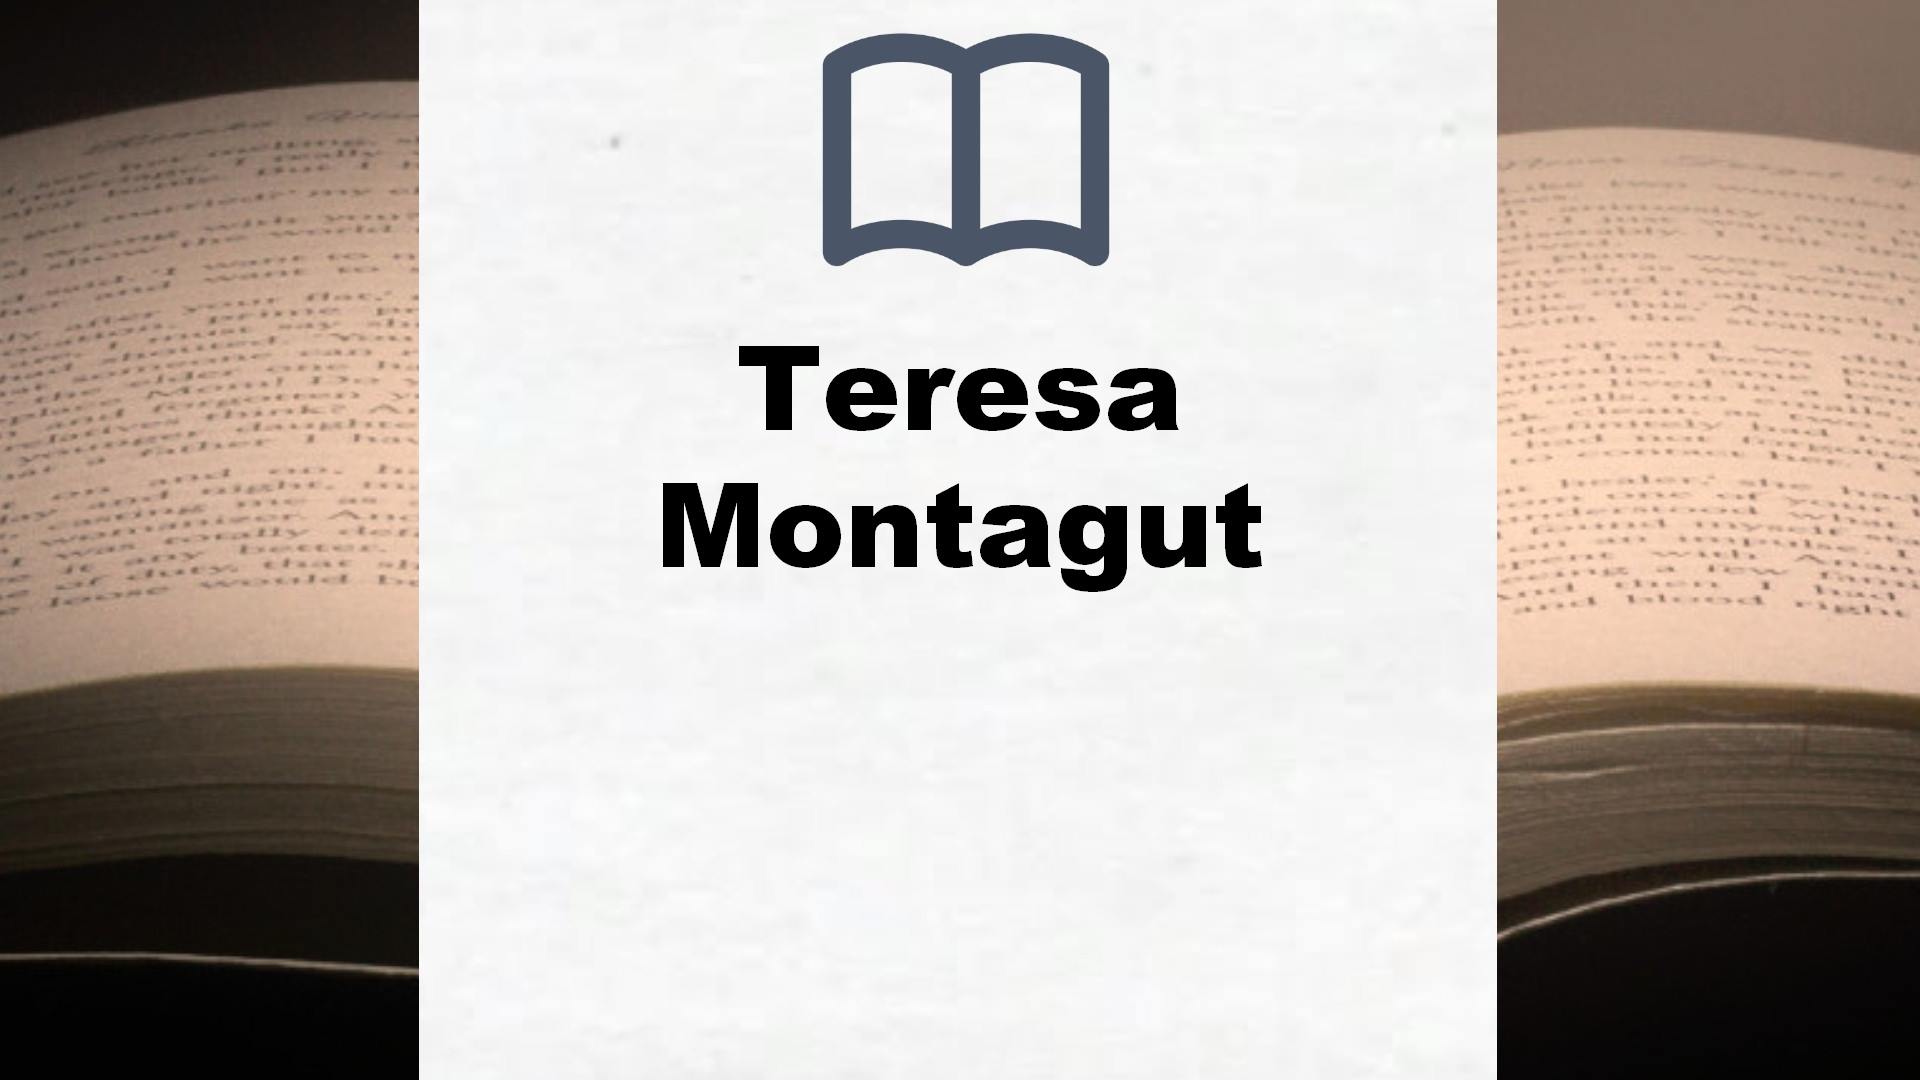 Libros Teresa Montagut